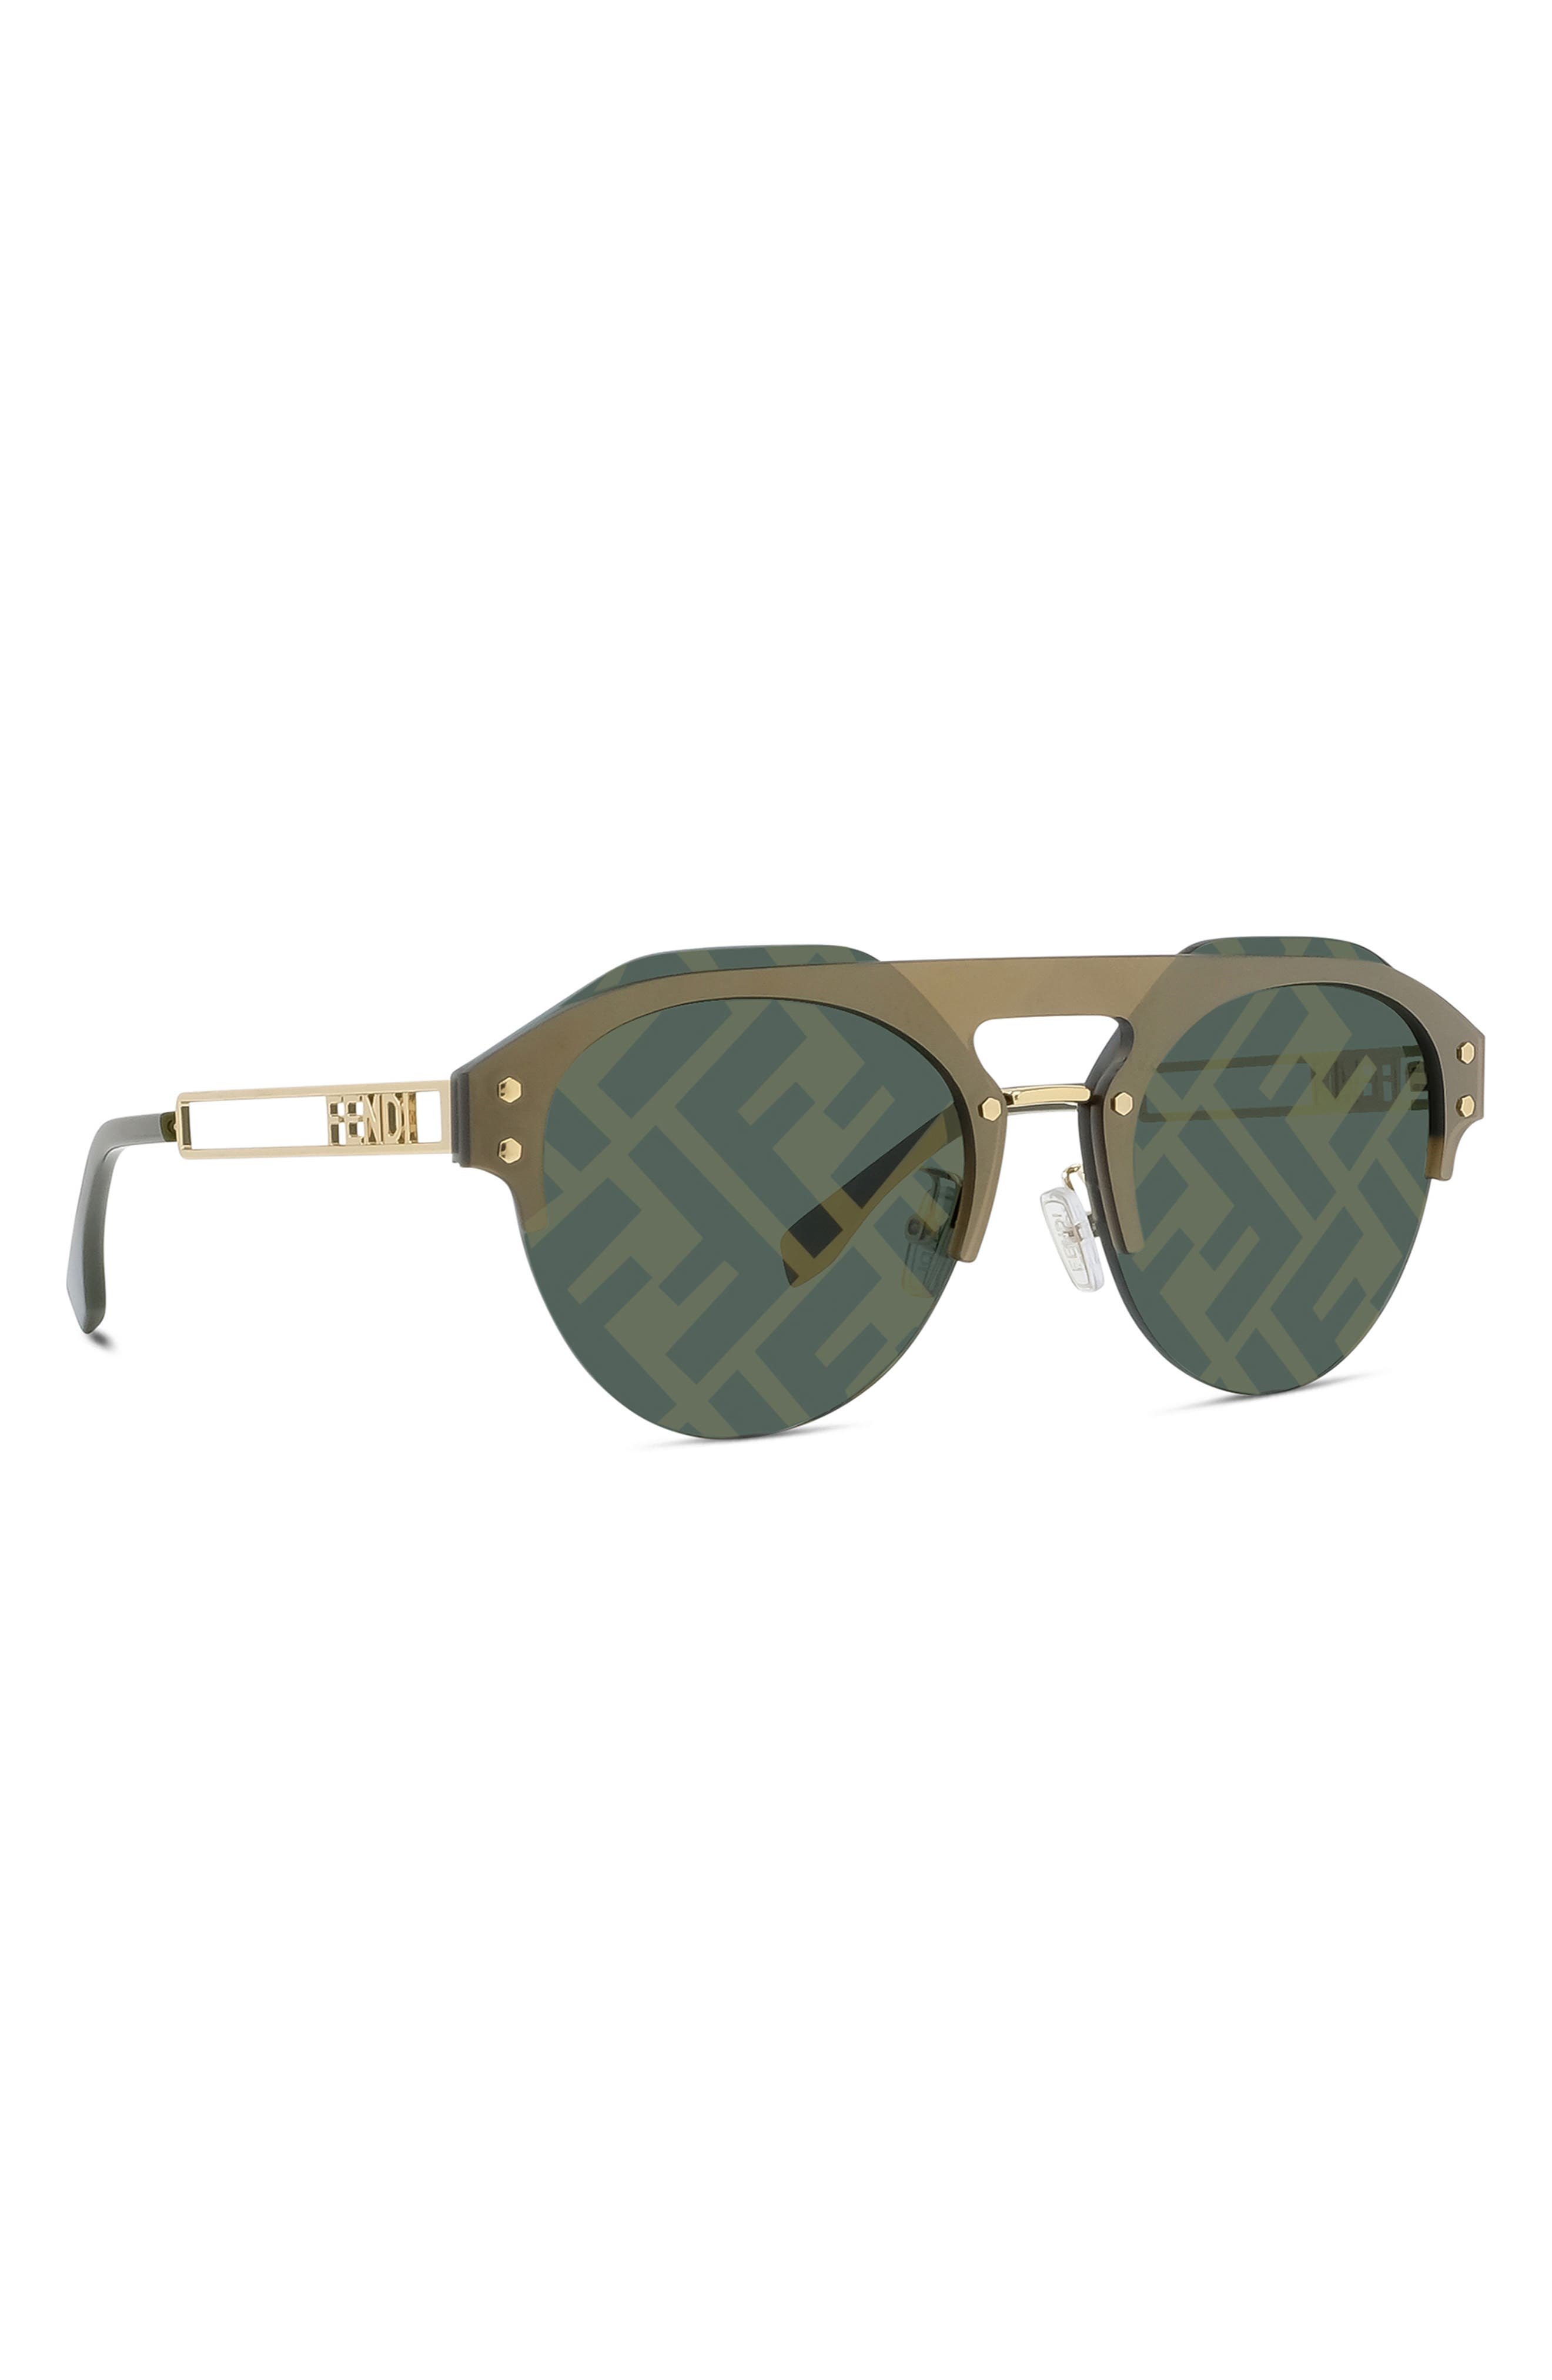 Fendi O'Lock - Palladium metal sunglasses with gray lenses and